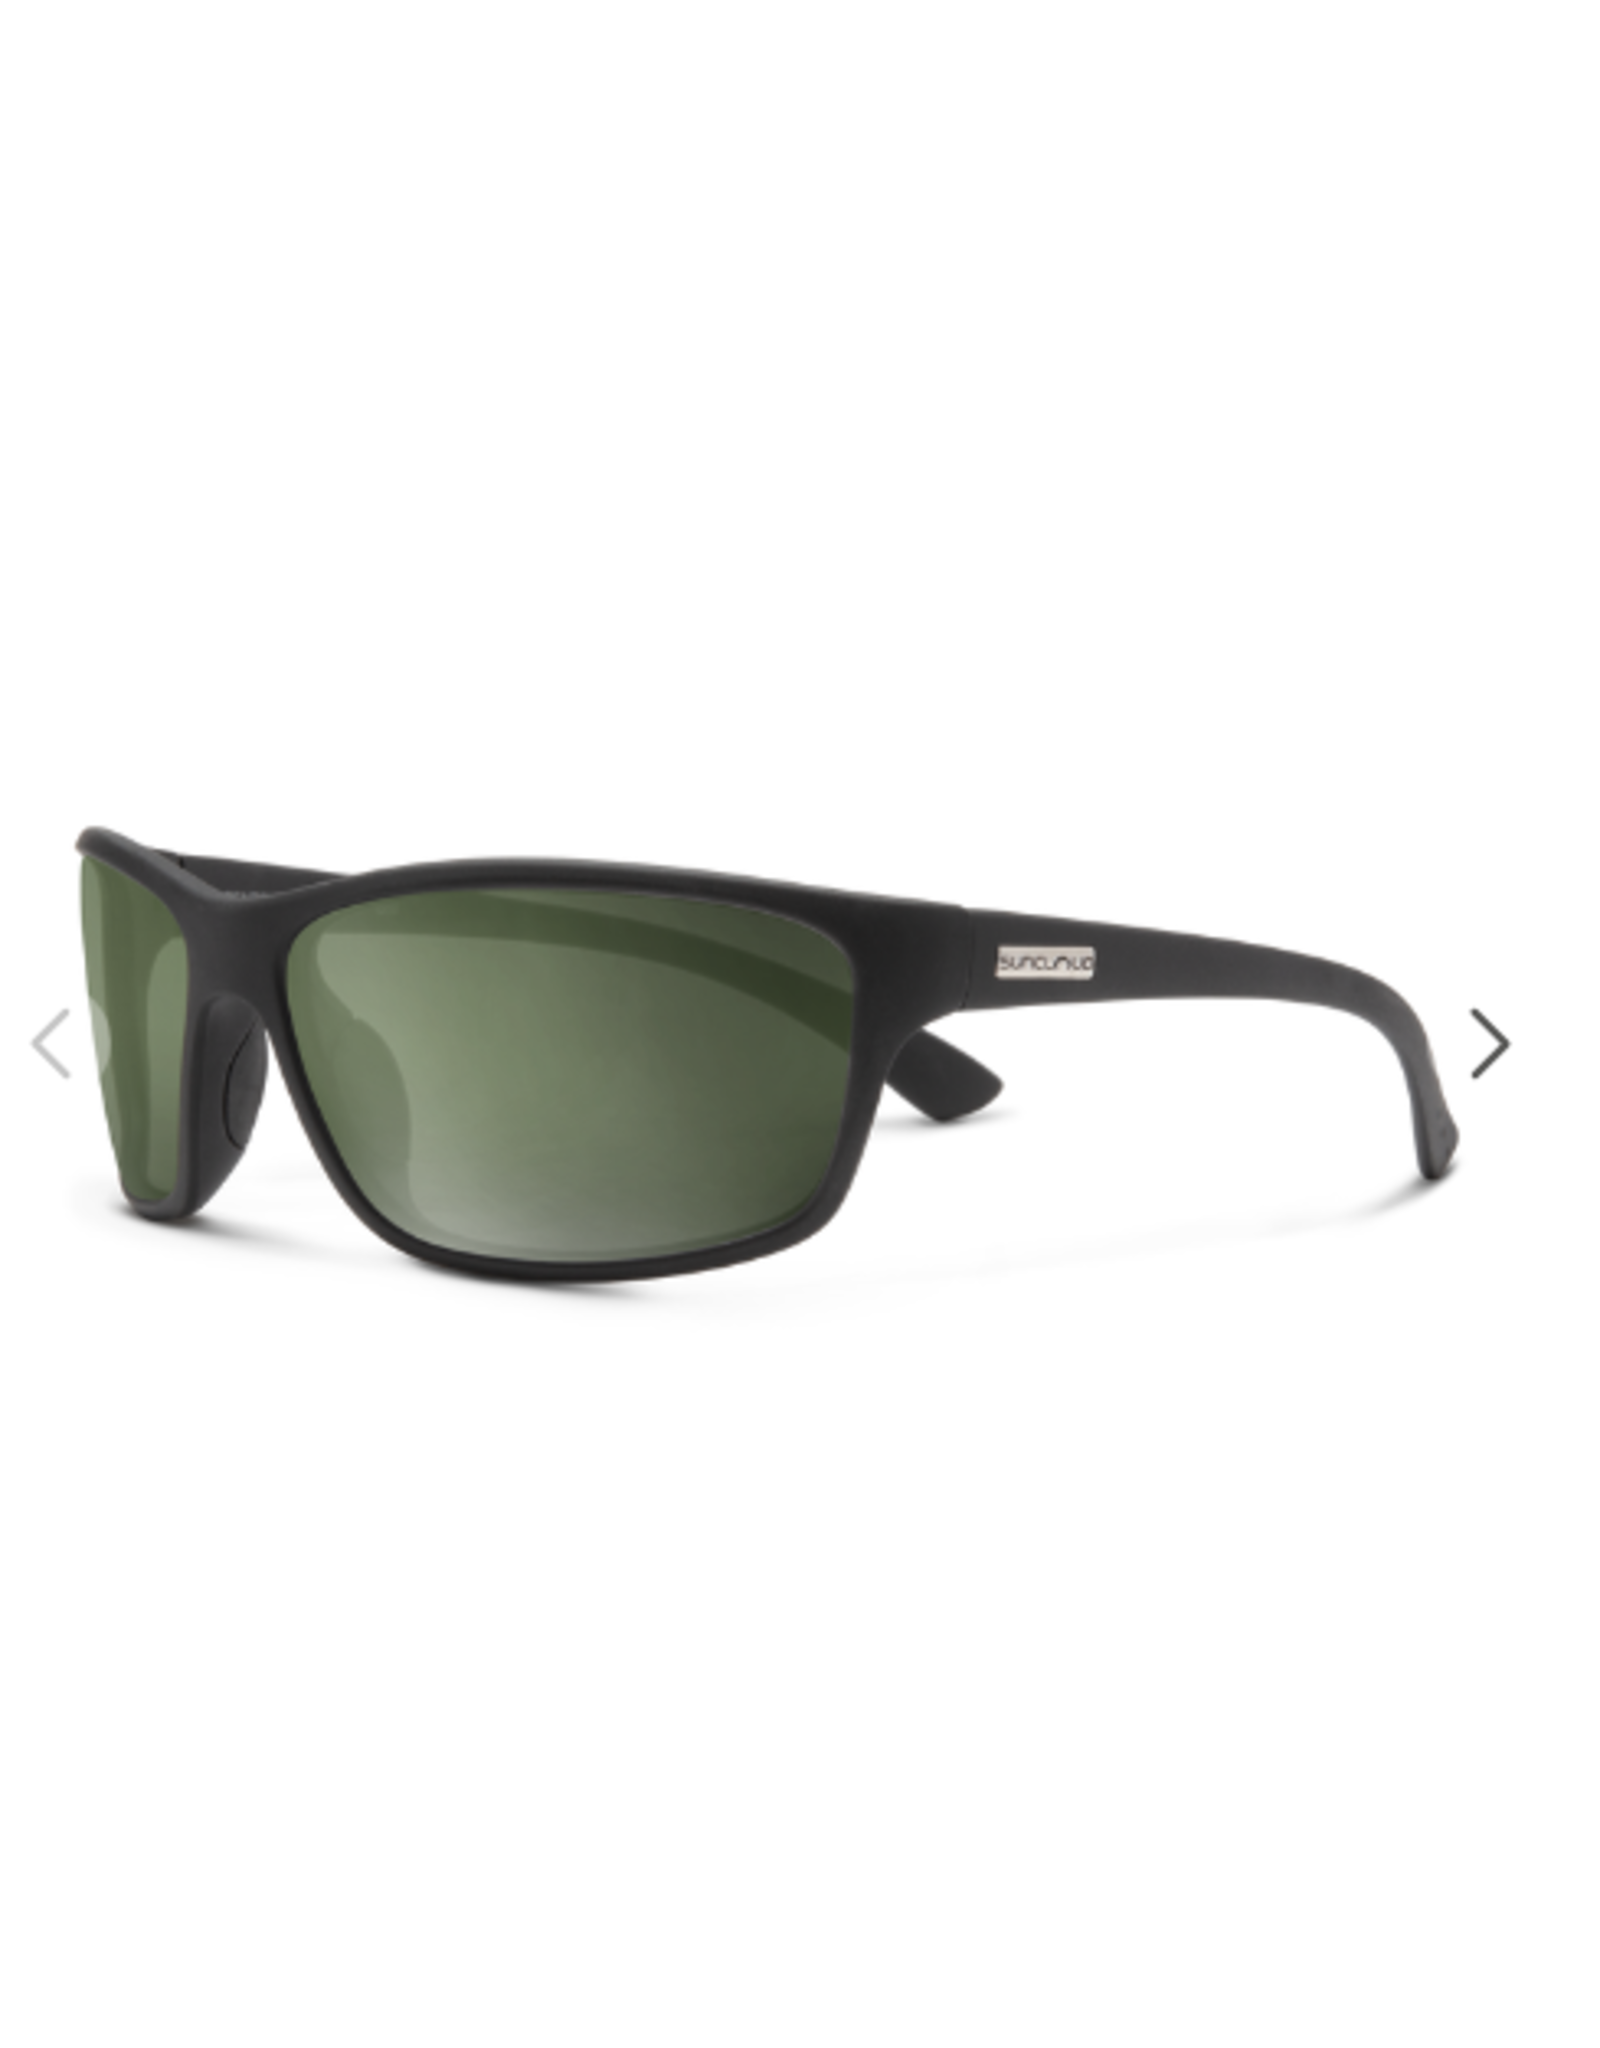 SunCloud Sentry $54.95 Select Color: Matte Black + Polarized Gray Green Lens